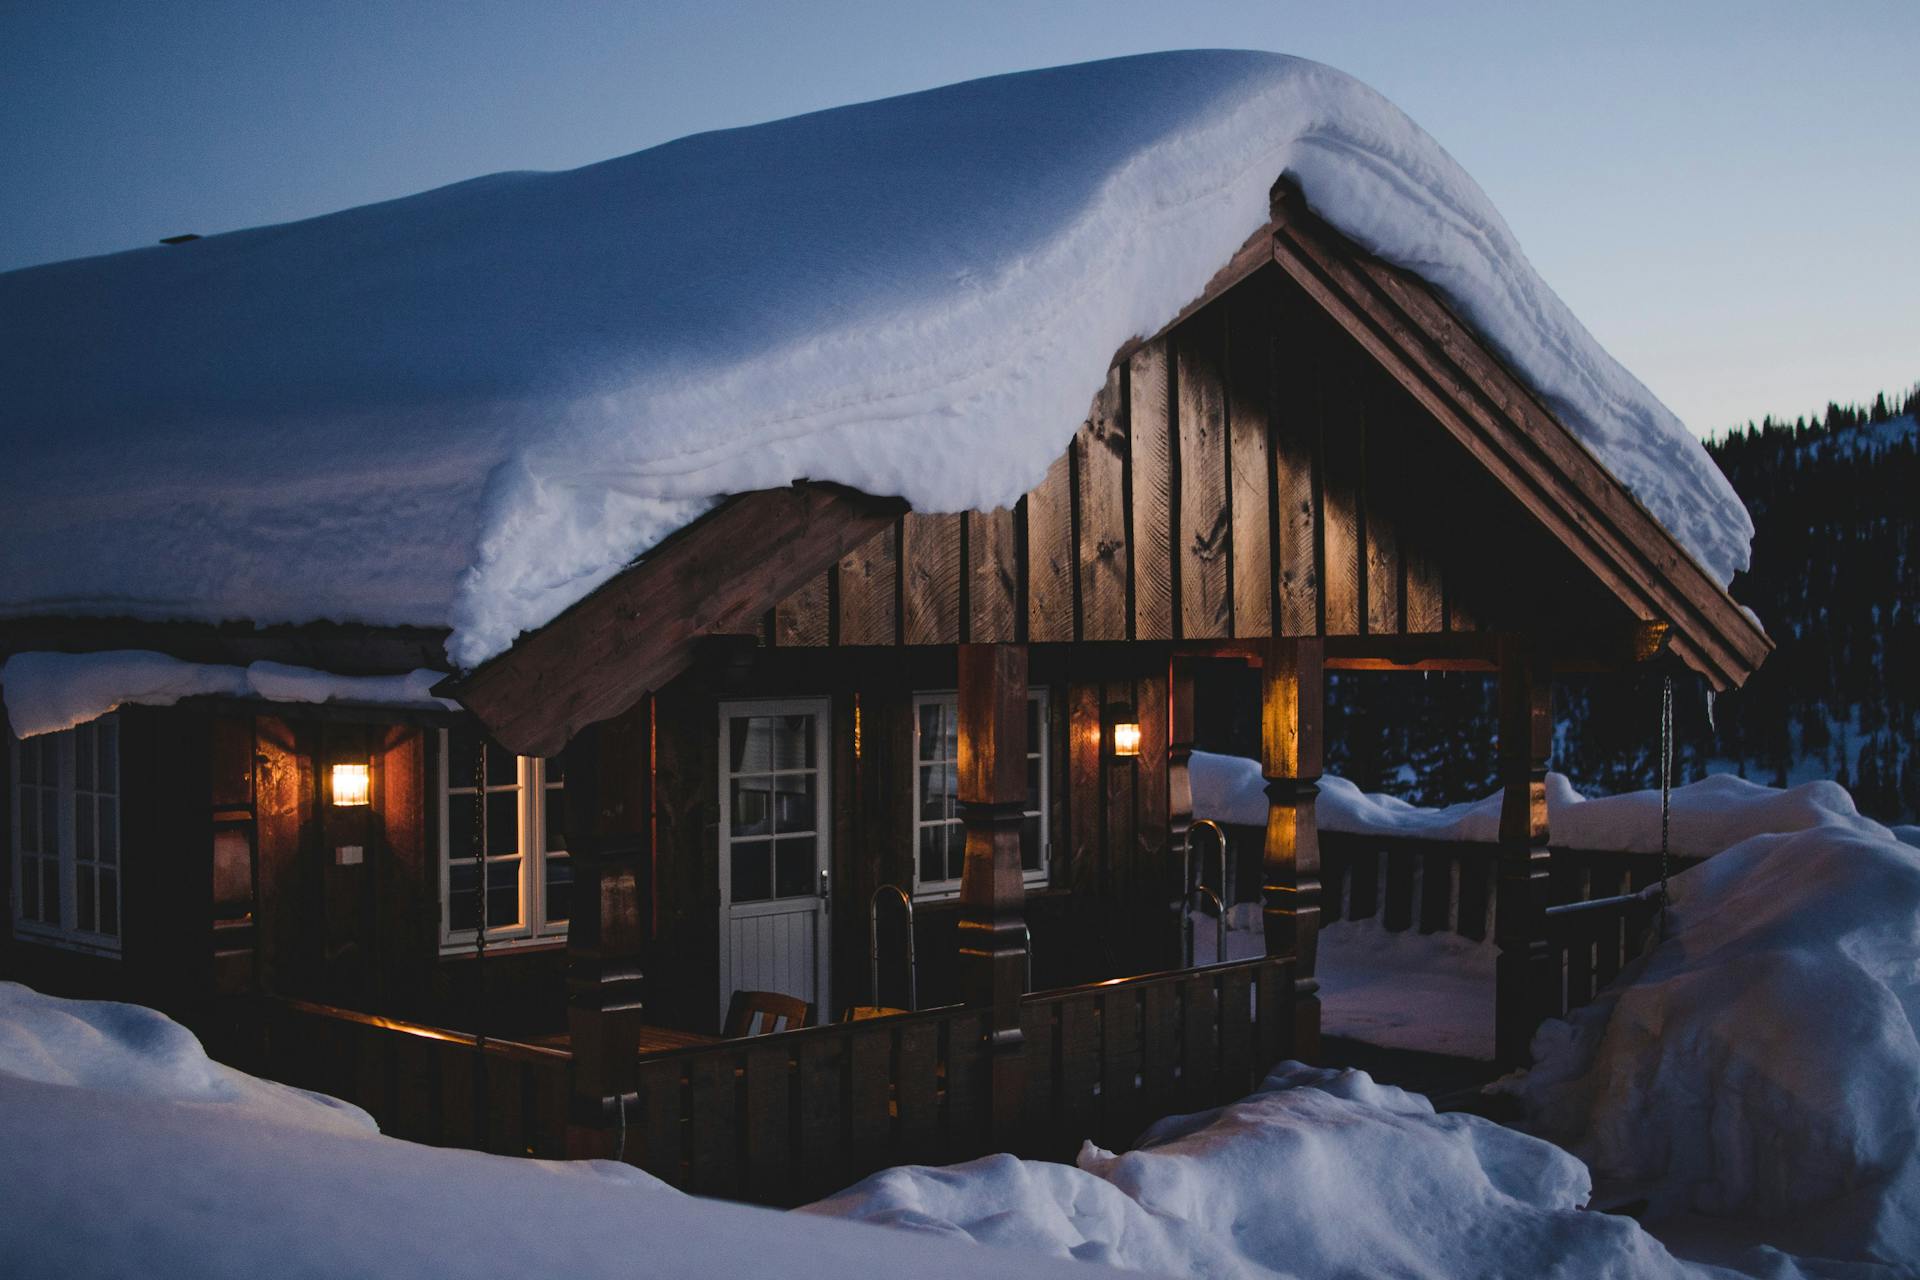 Photo a cabin under heavy snowfall